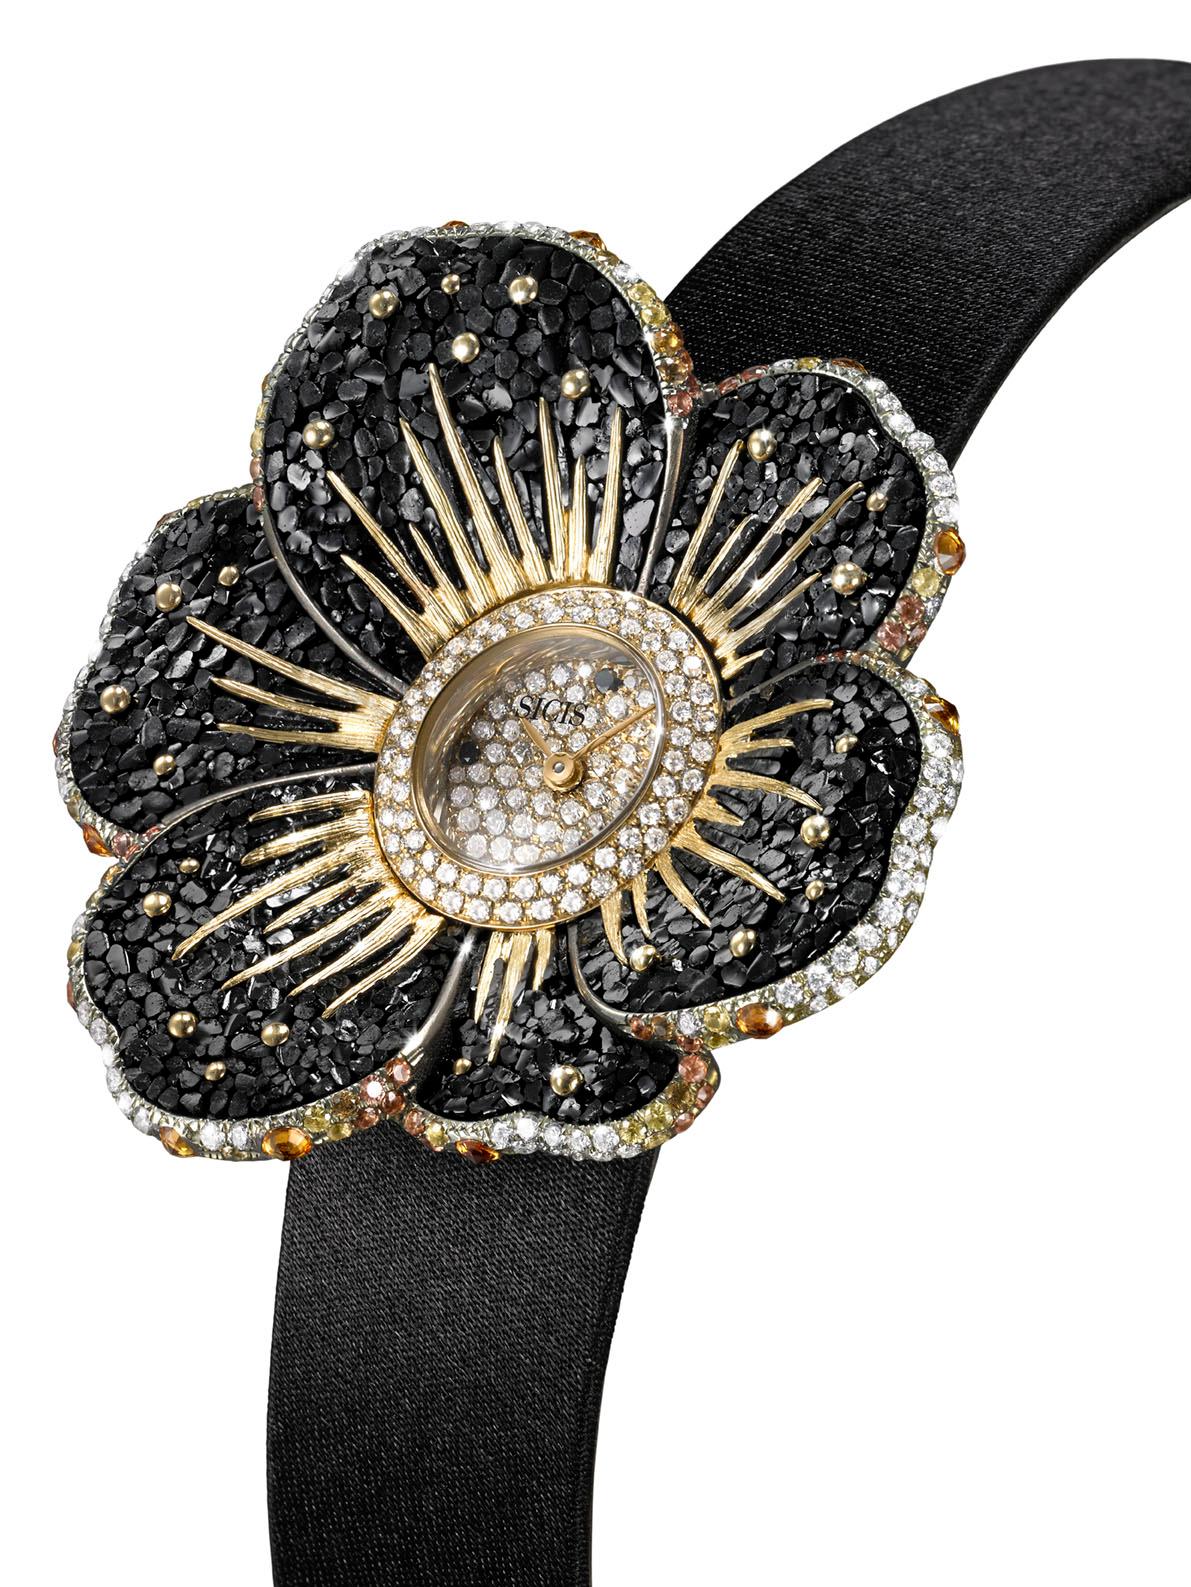 Brilliant Cut Watch Gold White & Black Diamonds Sapphires Satin Strap Handdecorated NanoMosaic For Sale